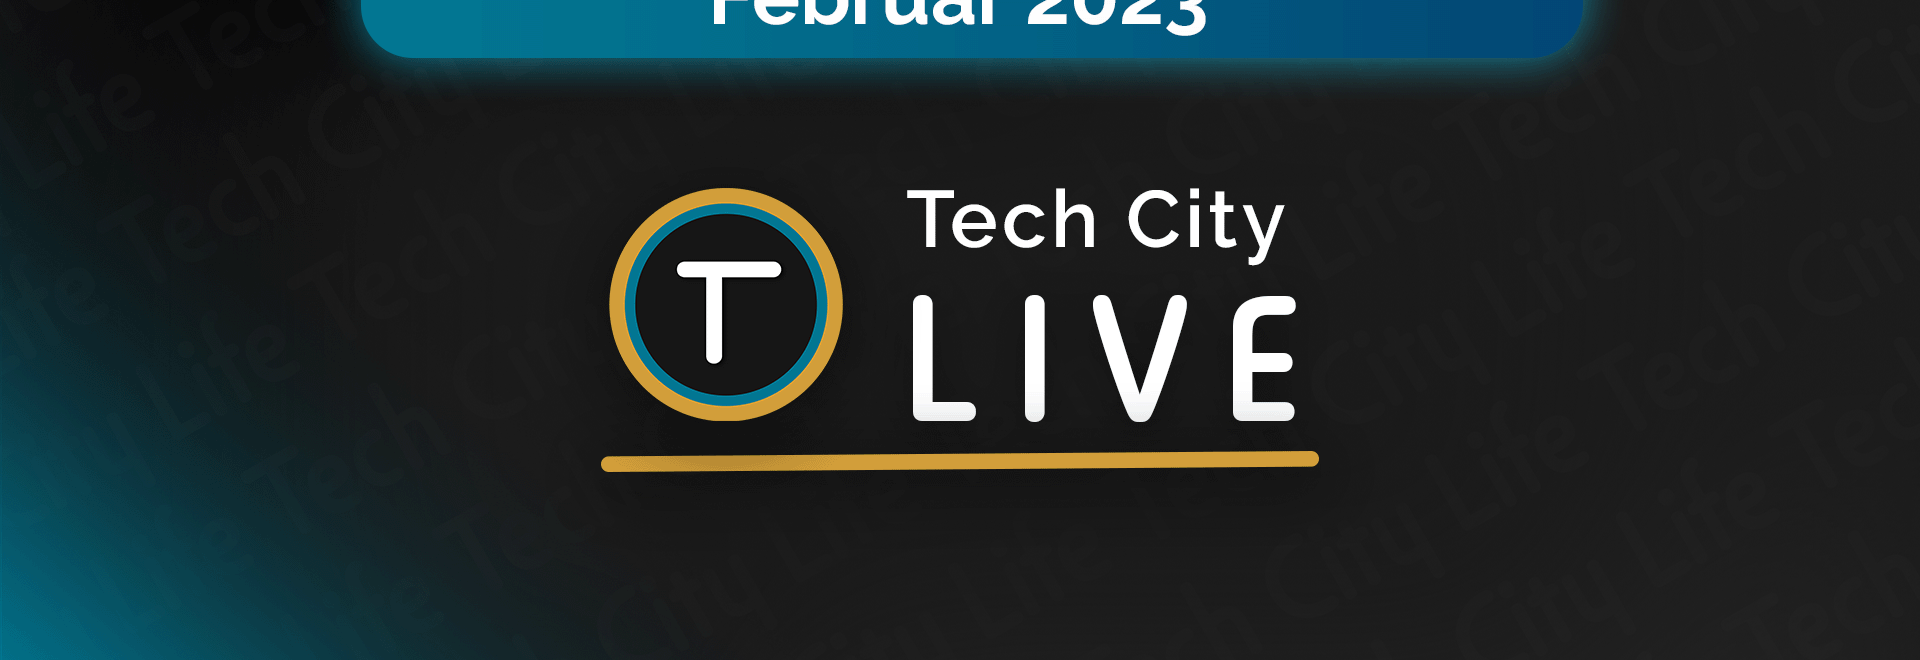 Tech City LIVE: Update 2.2 (Februar 2023)